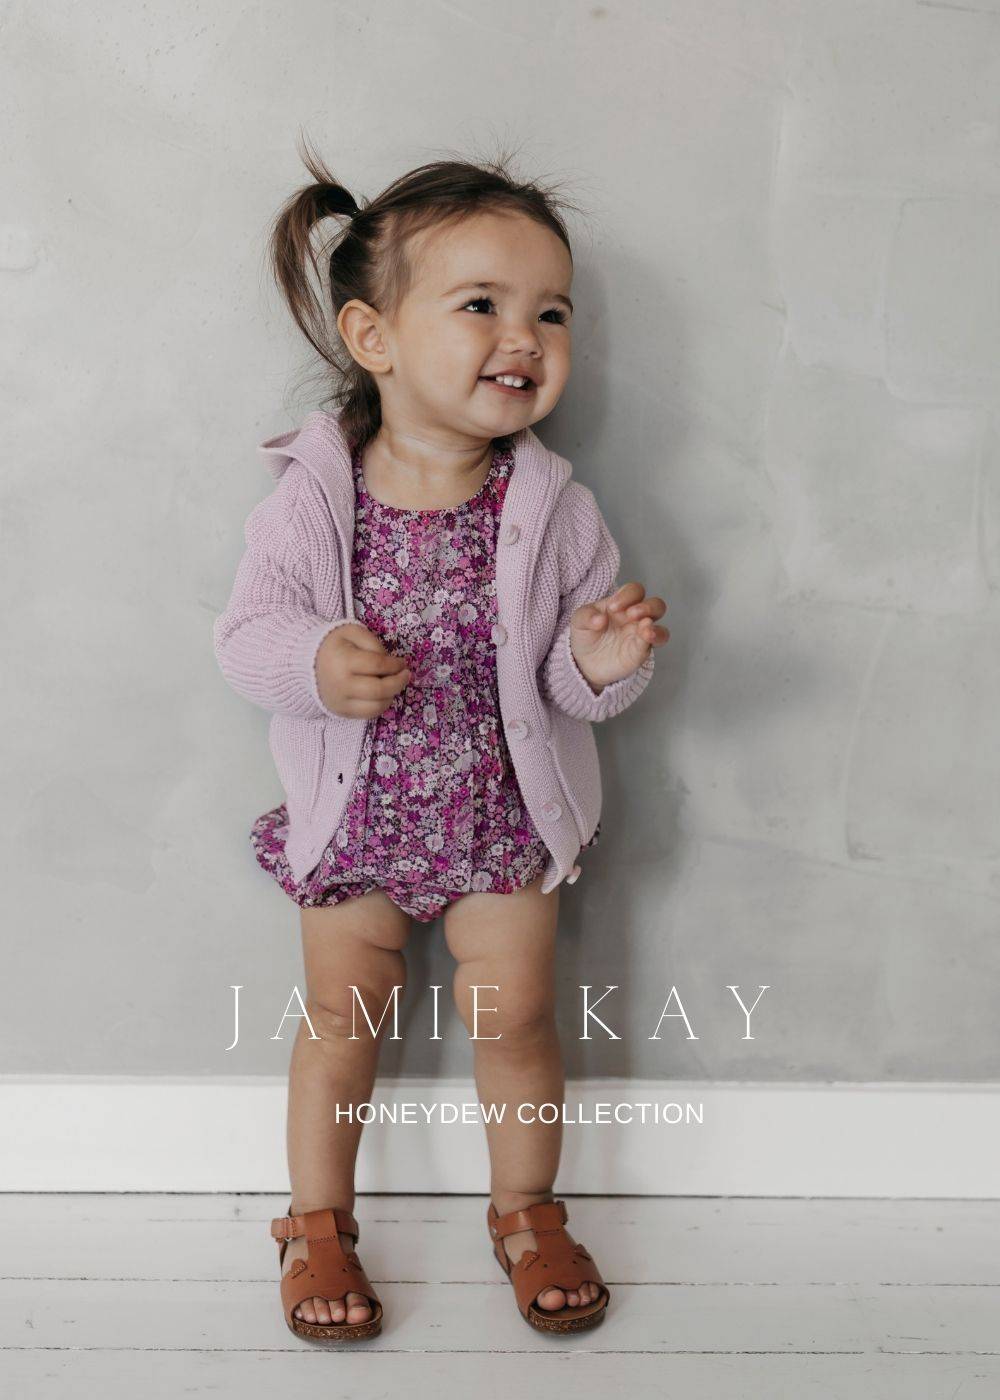 JAMIE KAY HONEYDEW COLLECTION LOOKBOOK - Tiny People